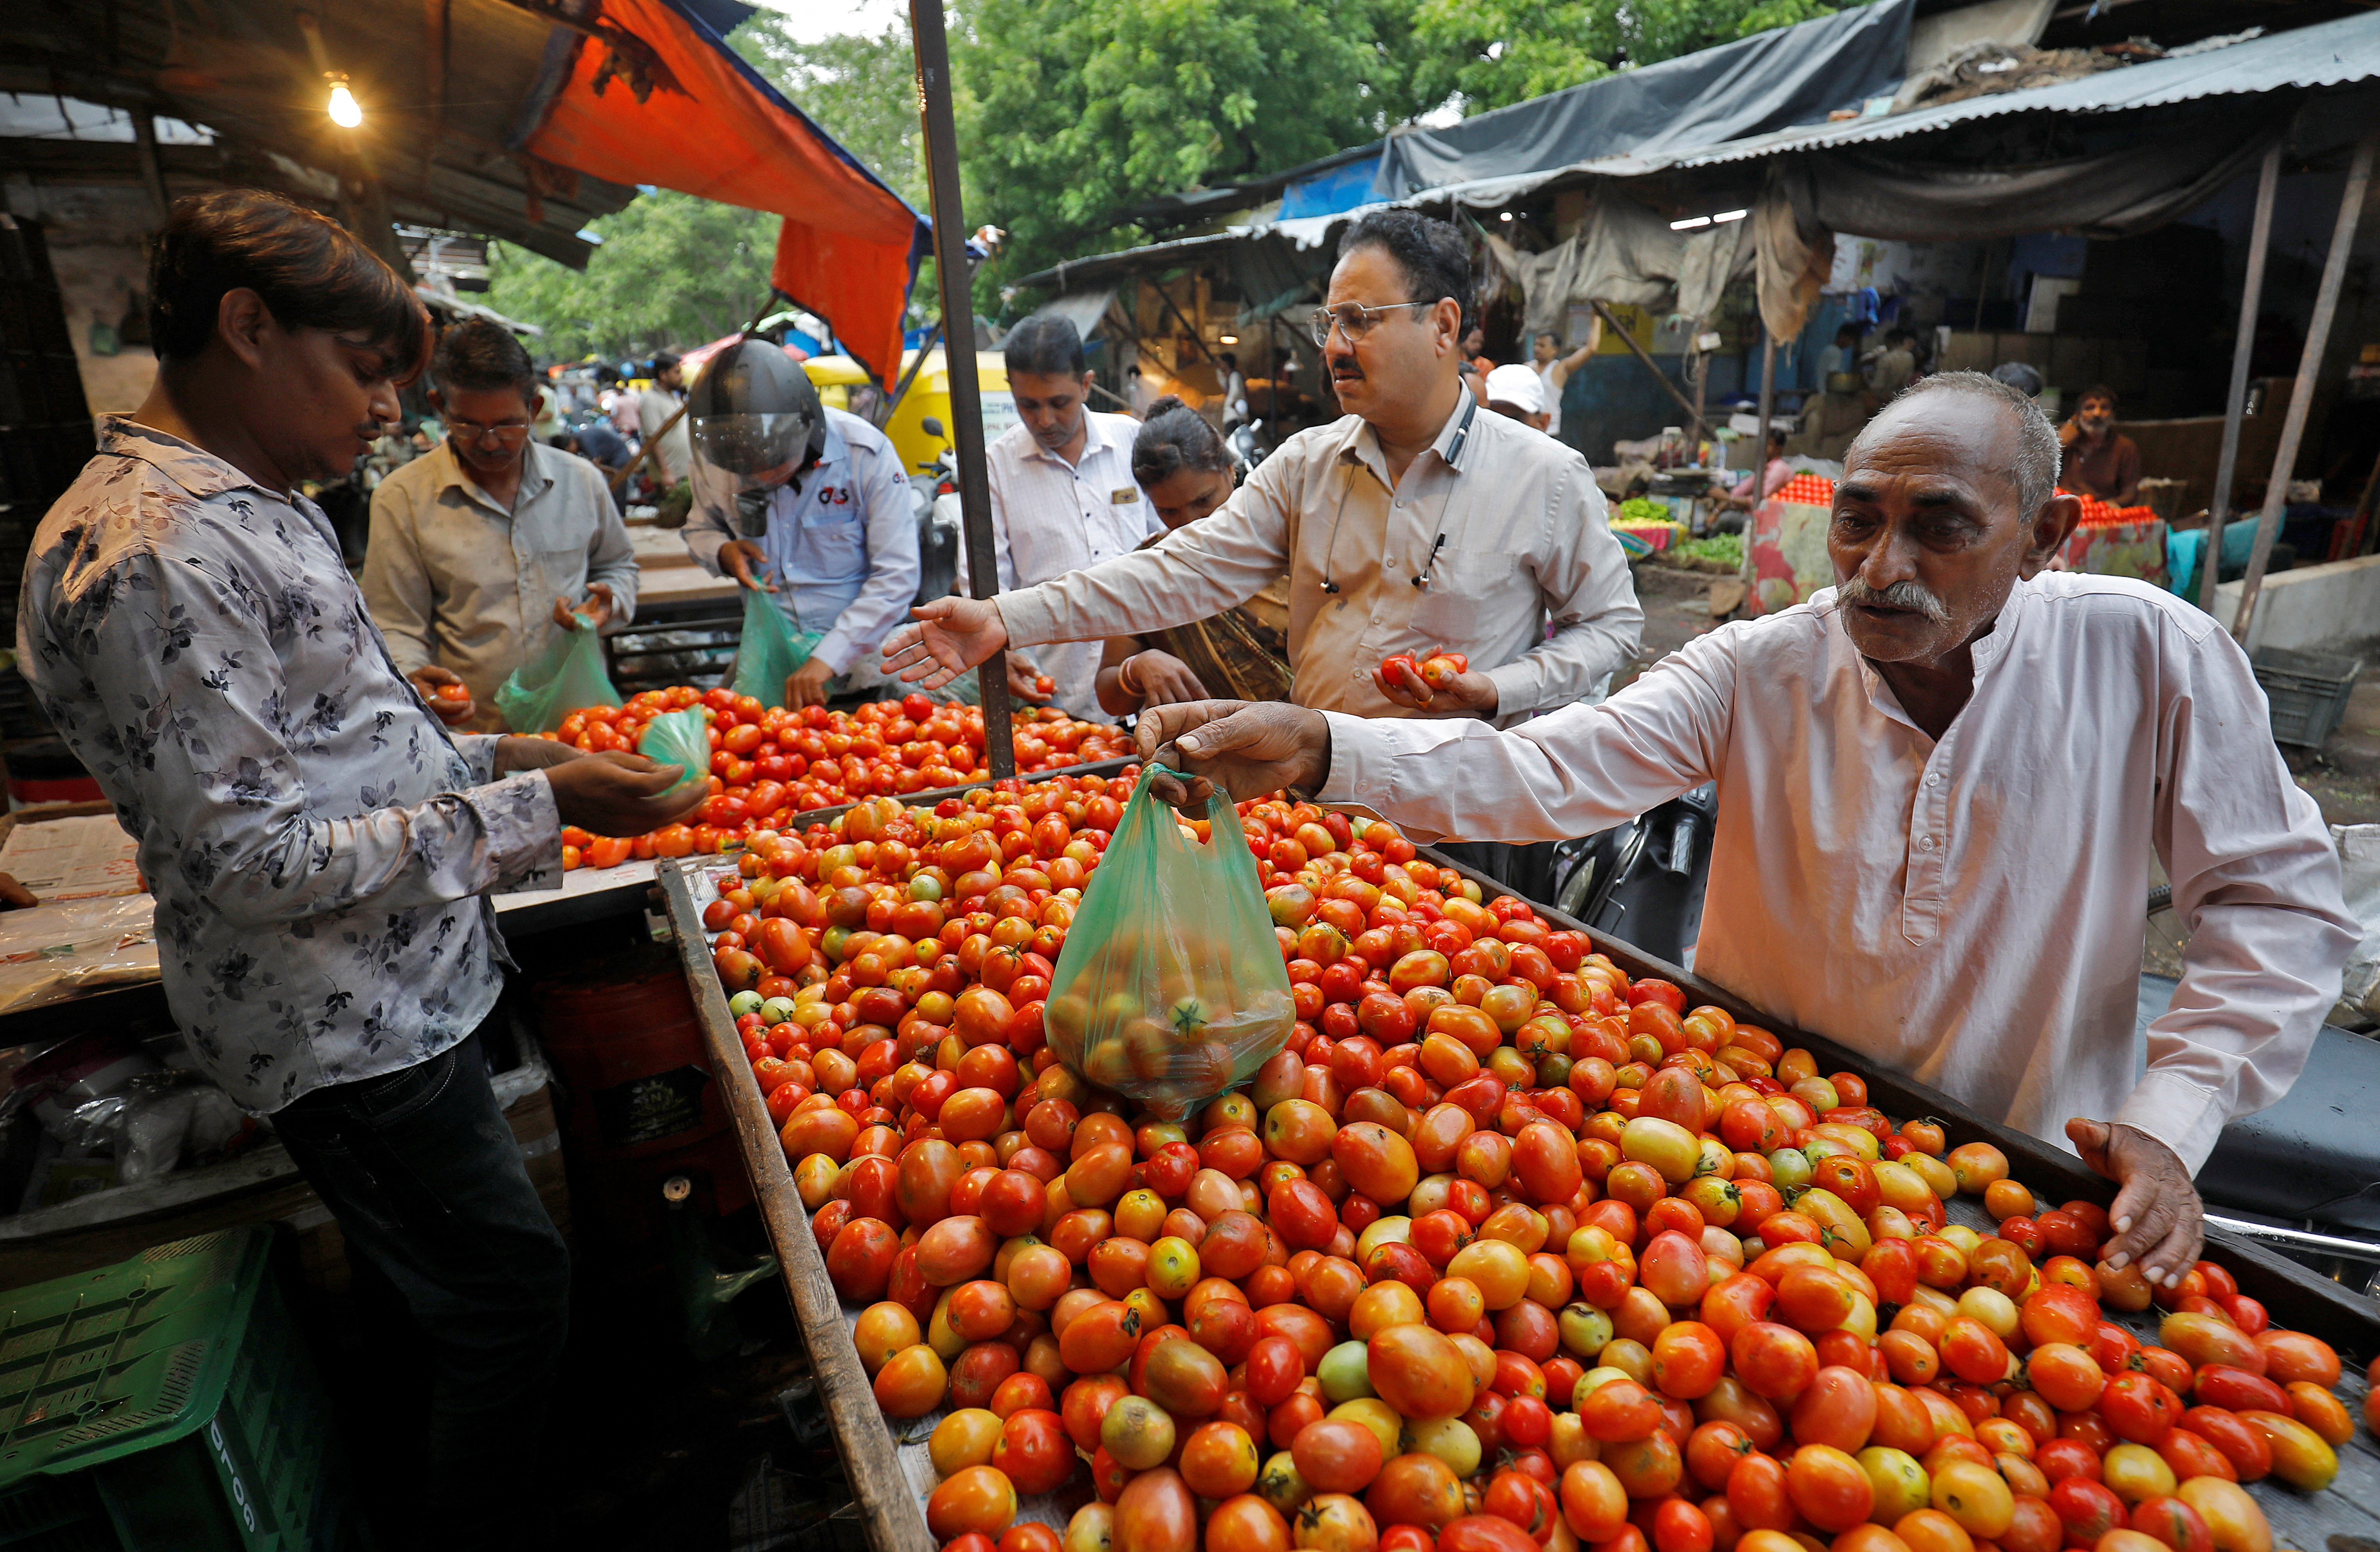 Tomato price shock hits Indian restaurants, cheaper puree sales boom |  Reuters